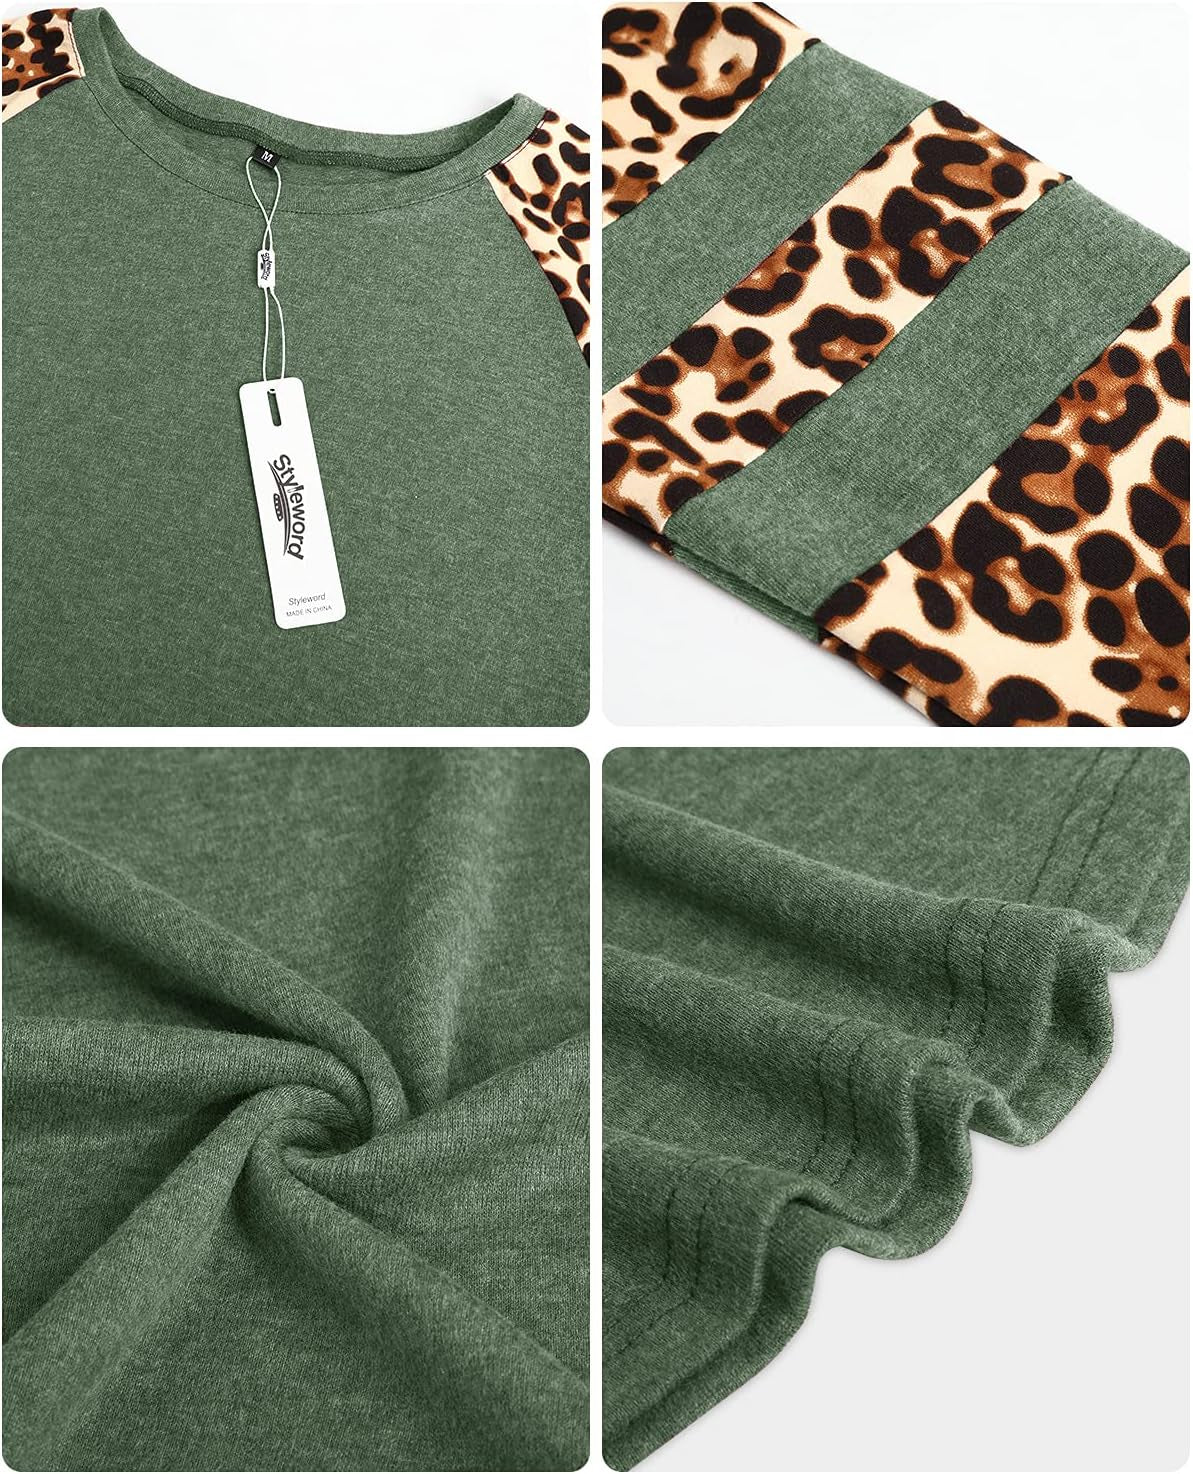 Women's Leopard Color Tunic Tops